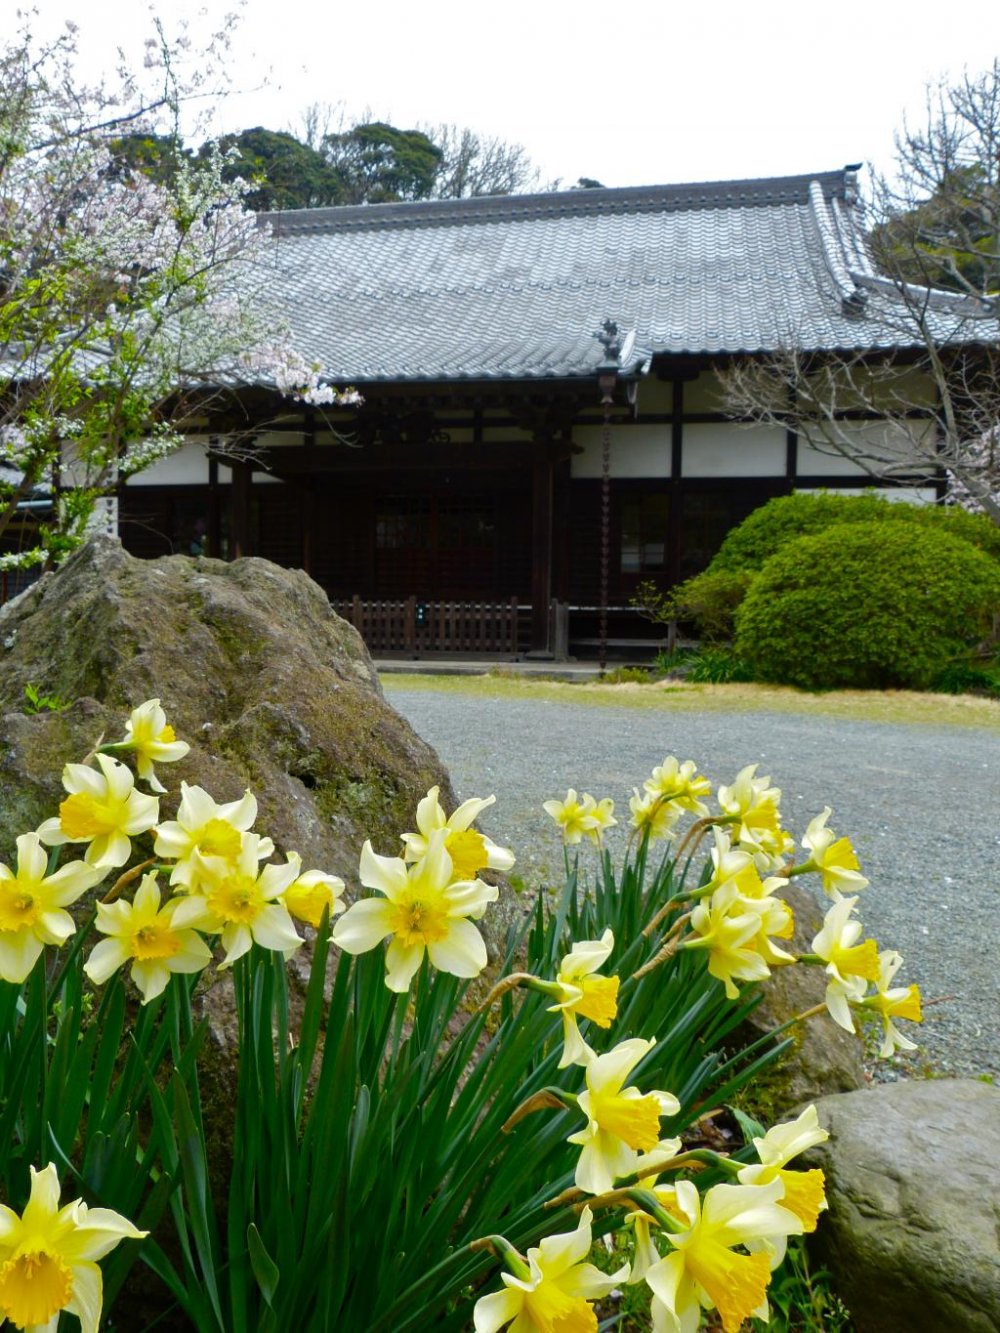 Japanese iris and the main hall